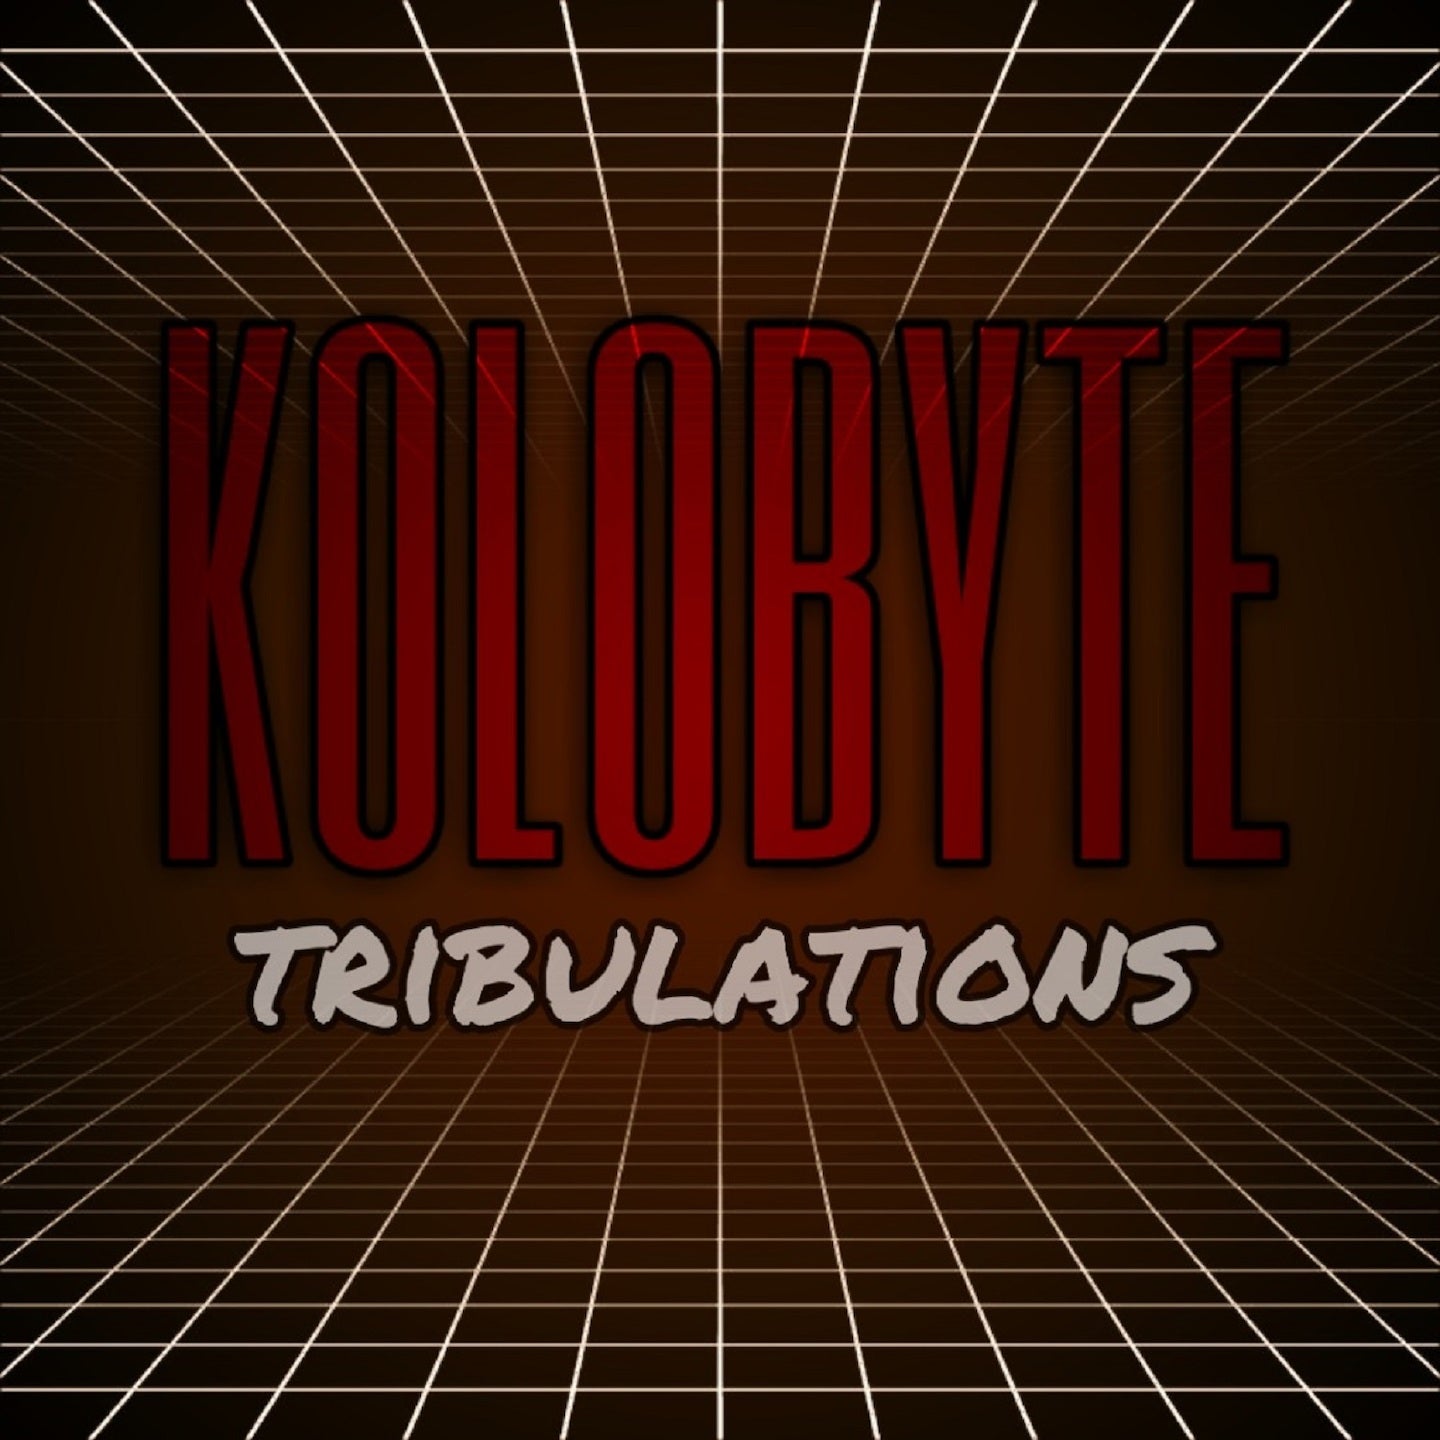 Tribulations by Kolobyte